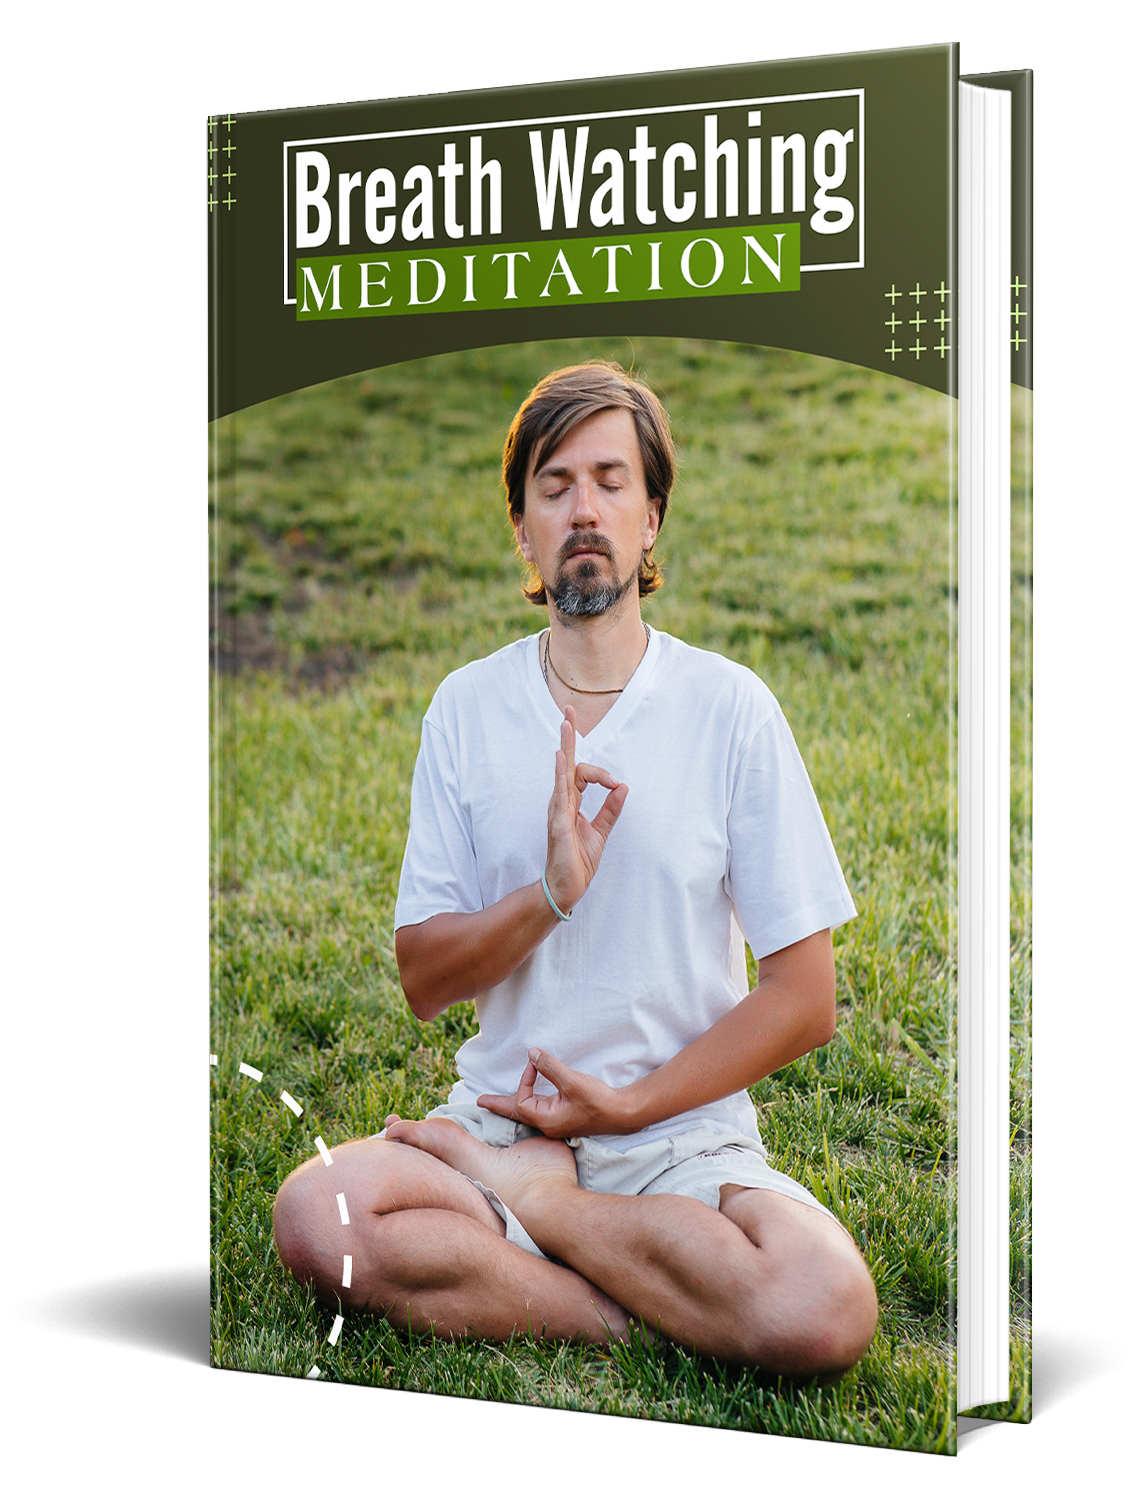 Breath Watching Meditation - BigProductStore.com